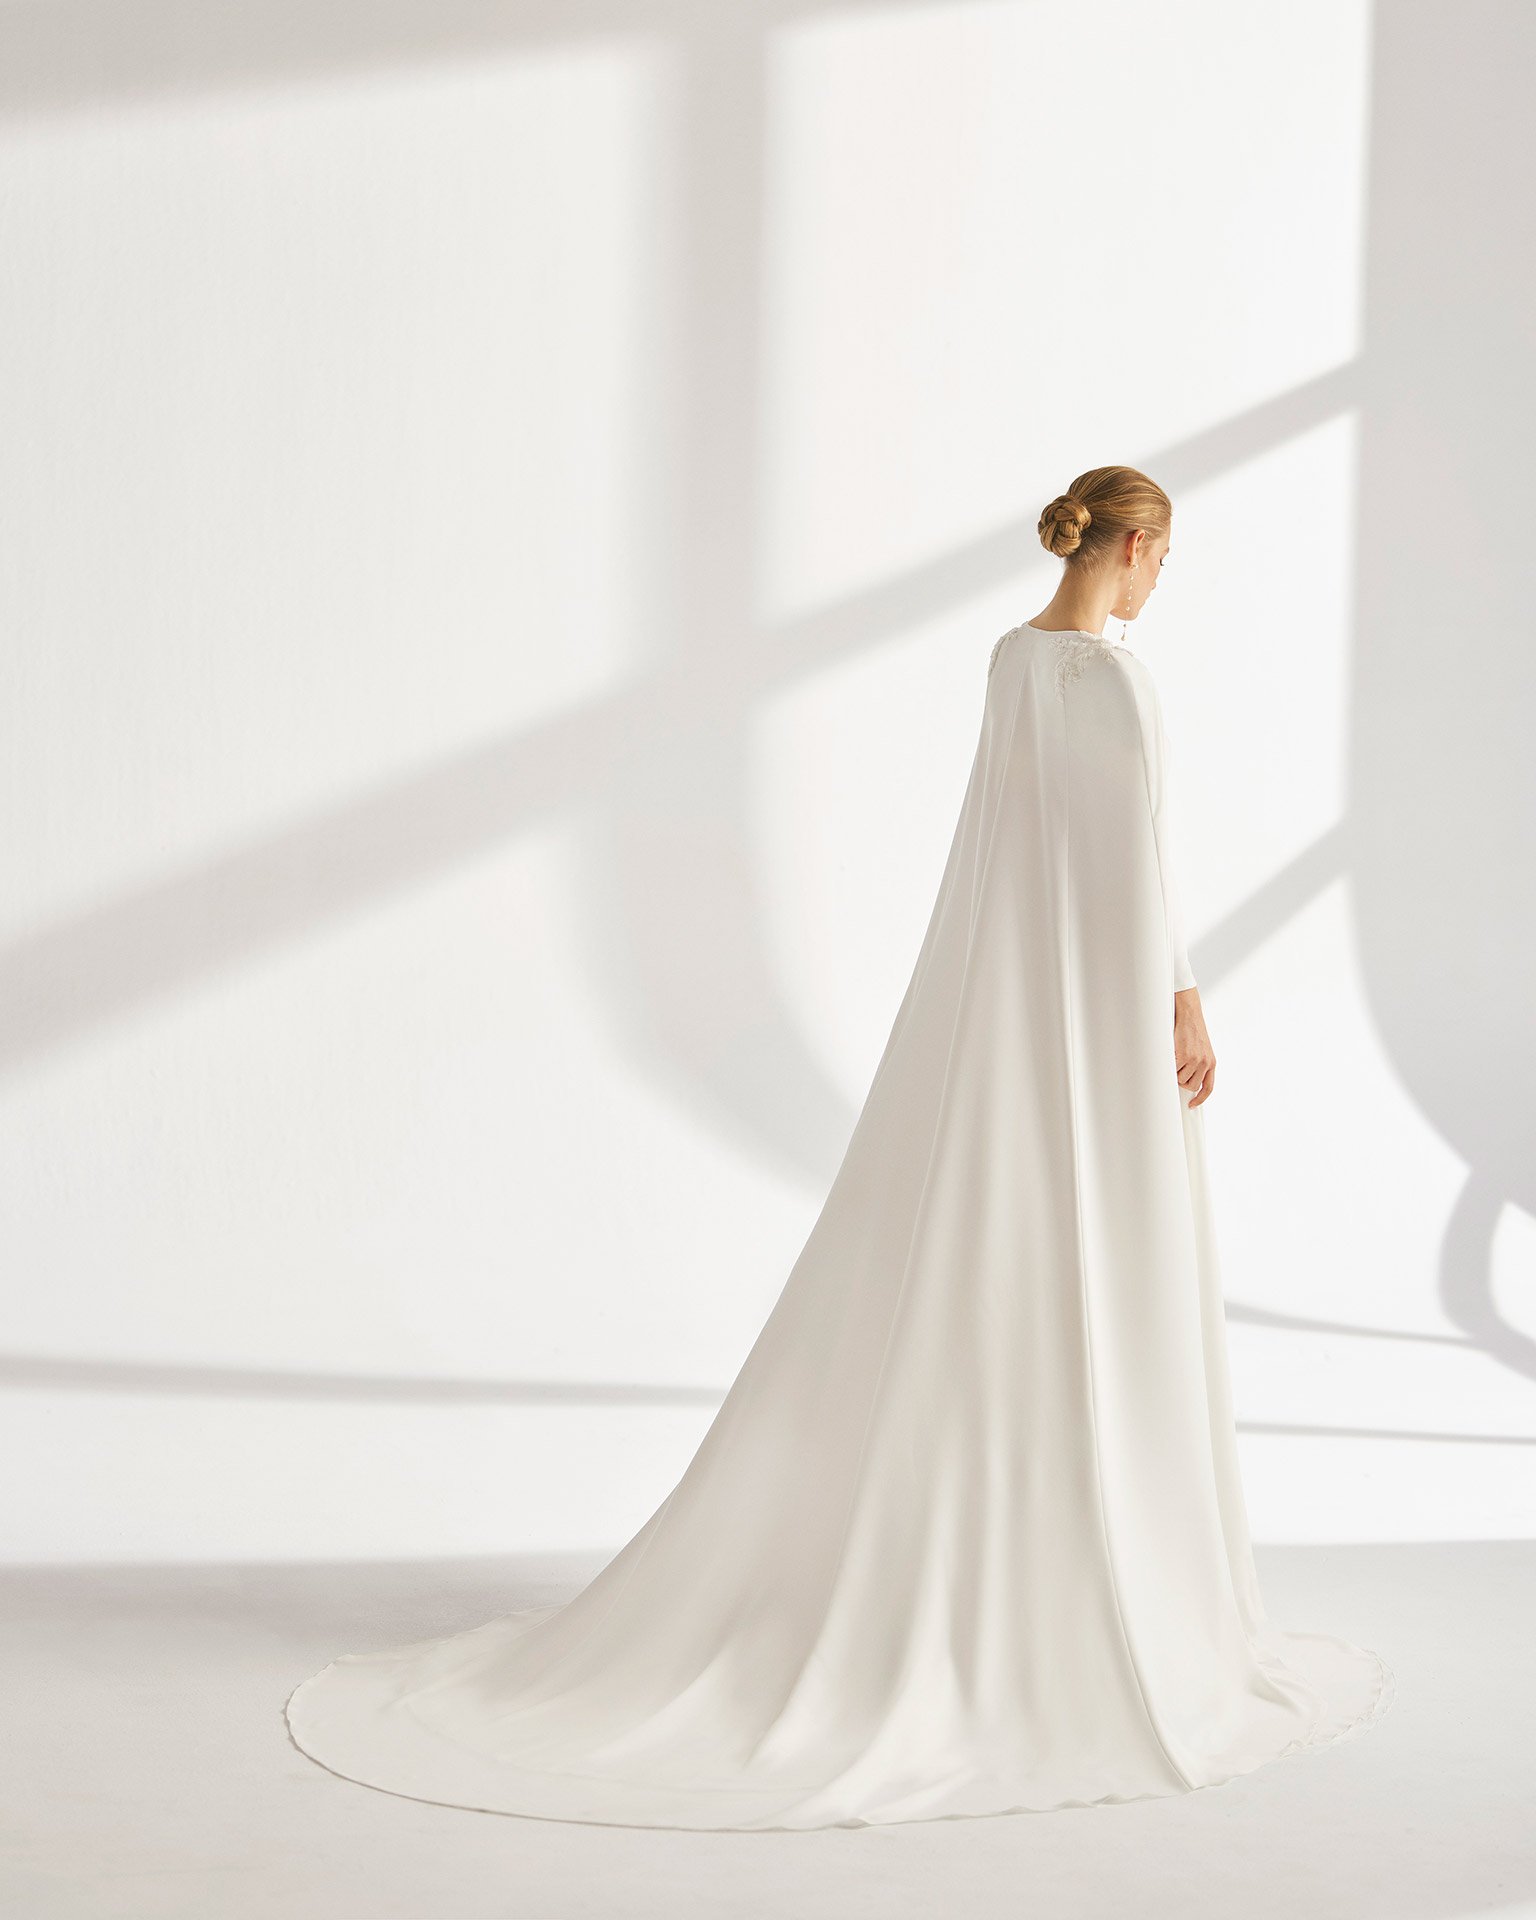 Couture luxury wedding dress collection | Detroit bridal Atelier ...